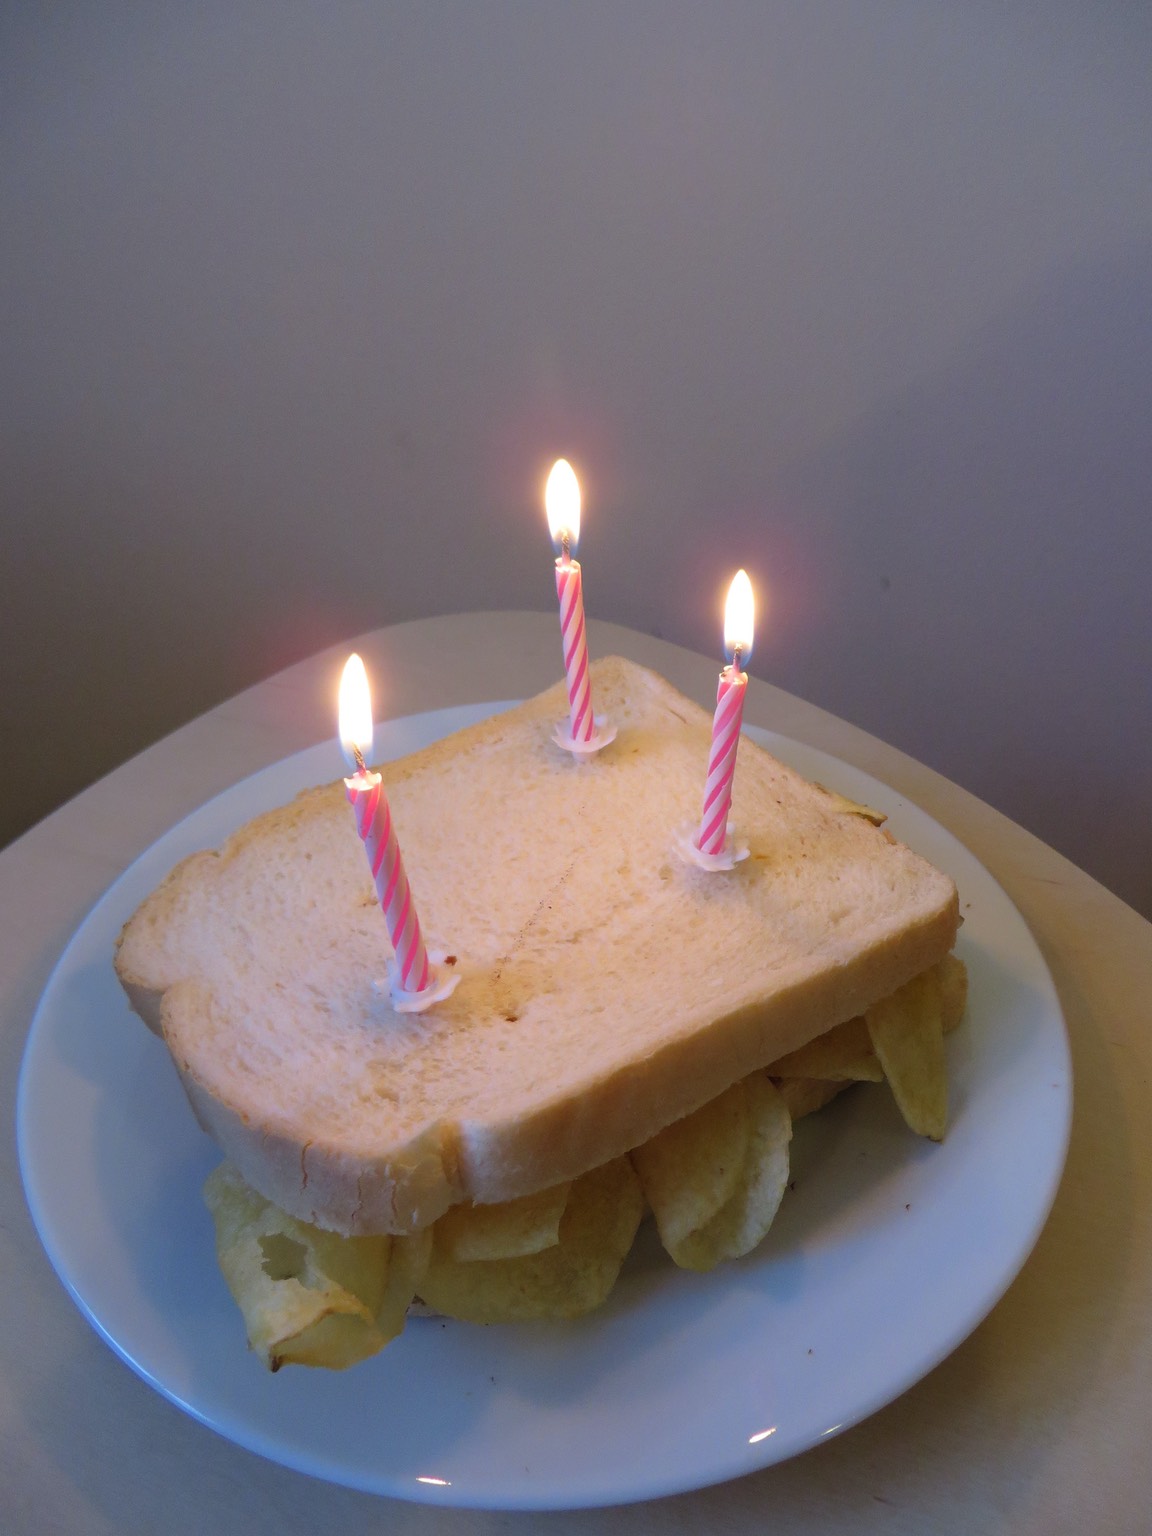 Three birthday candles on a white crisp sandwich